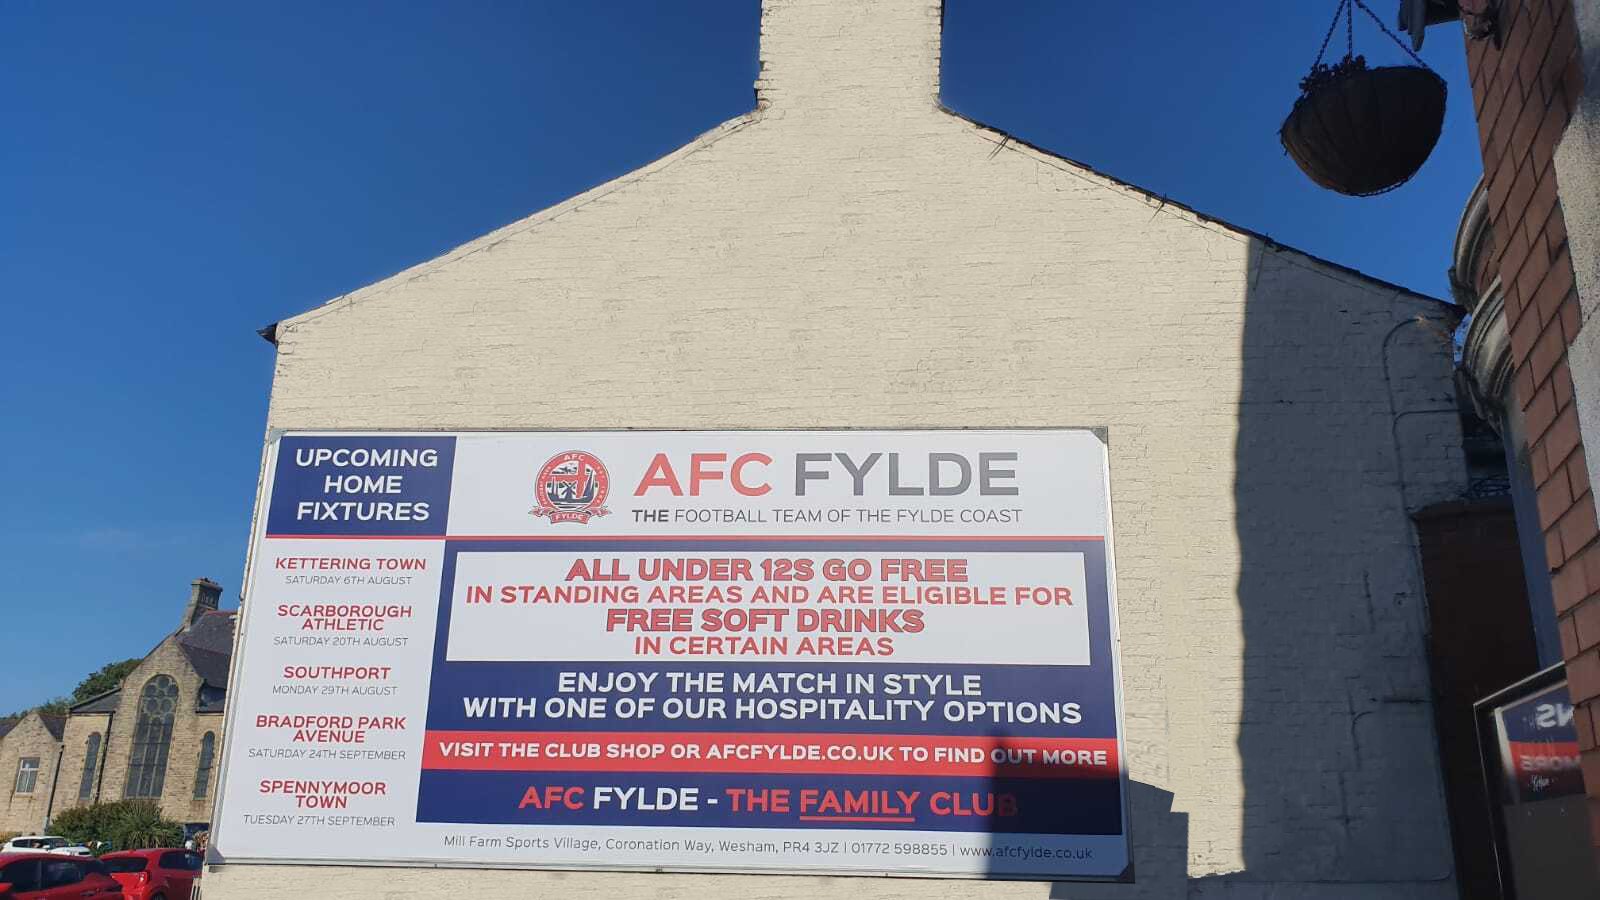 AFC Fylde's newly updated billboard on Poulton Street, Kirkham | BuildingSkinz